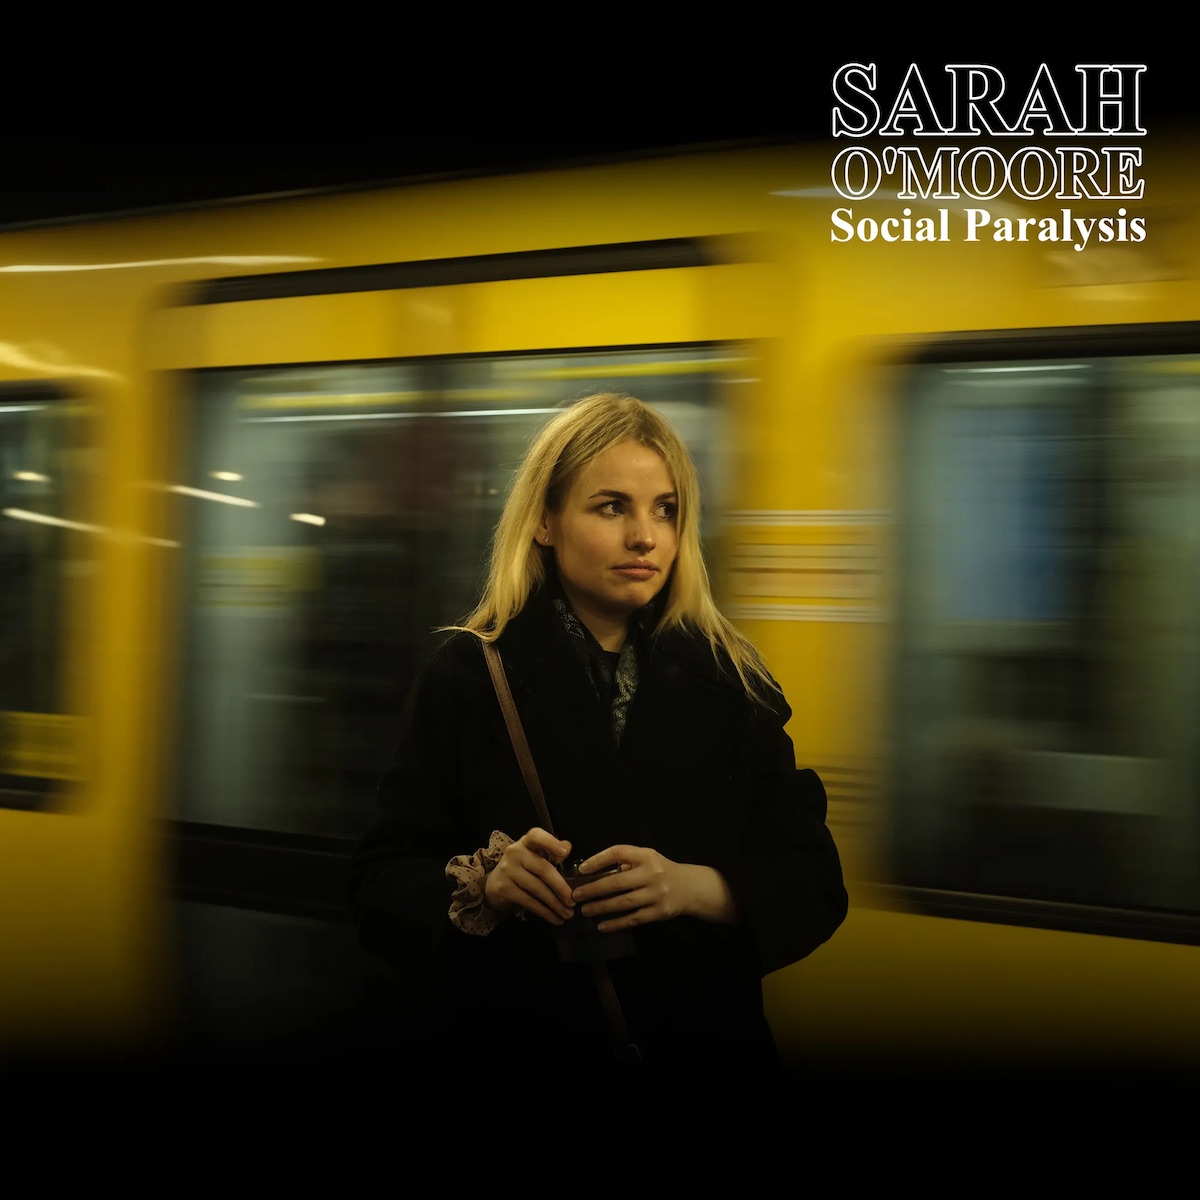 DEBUT EP REVIEW: Social Paralysis by Sarah O’Moore